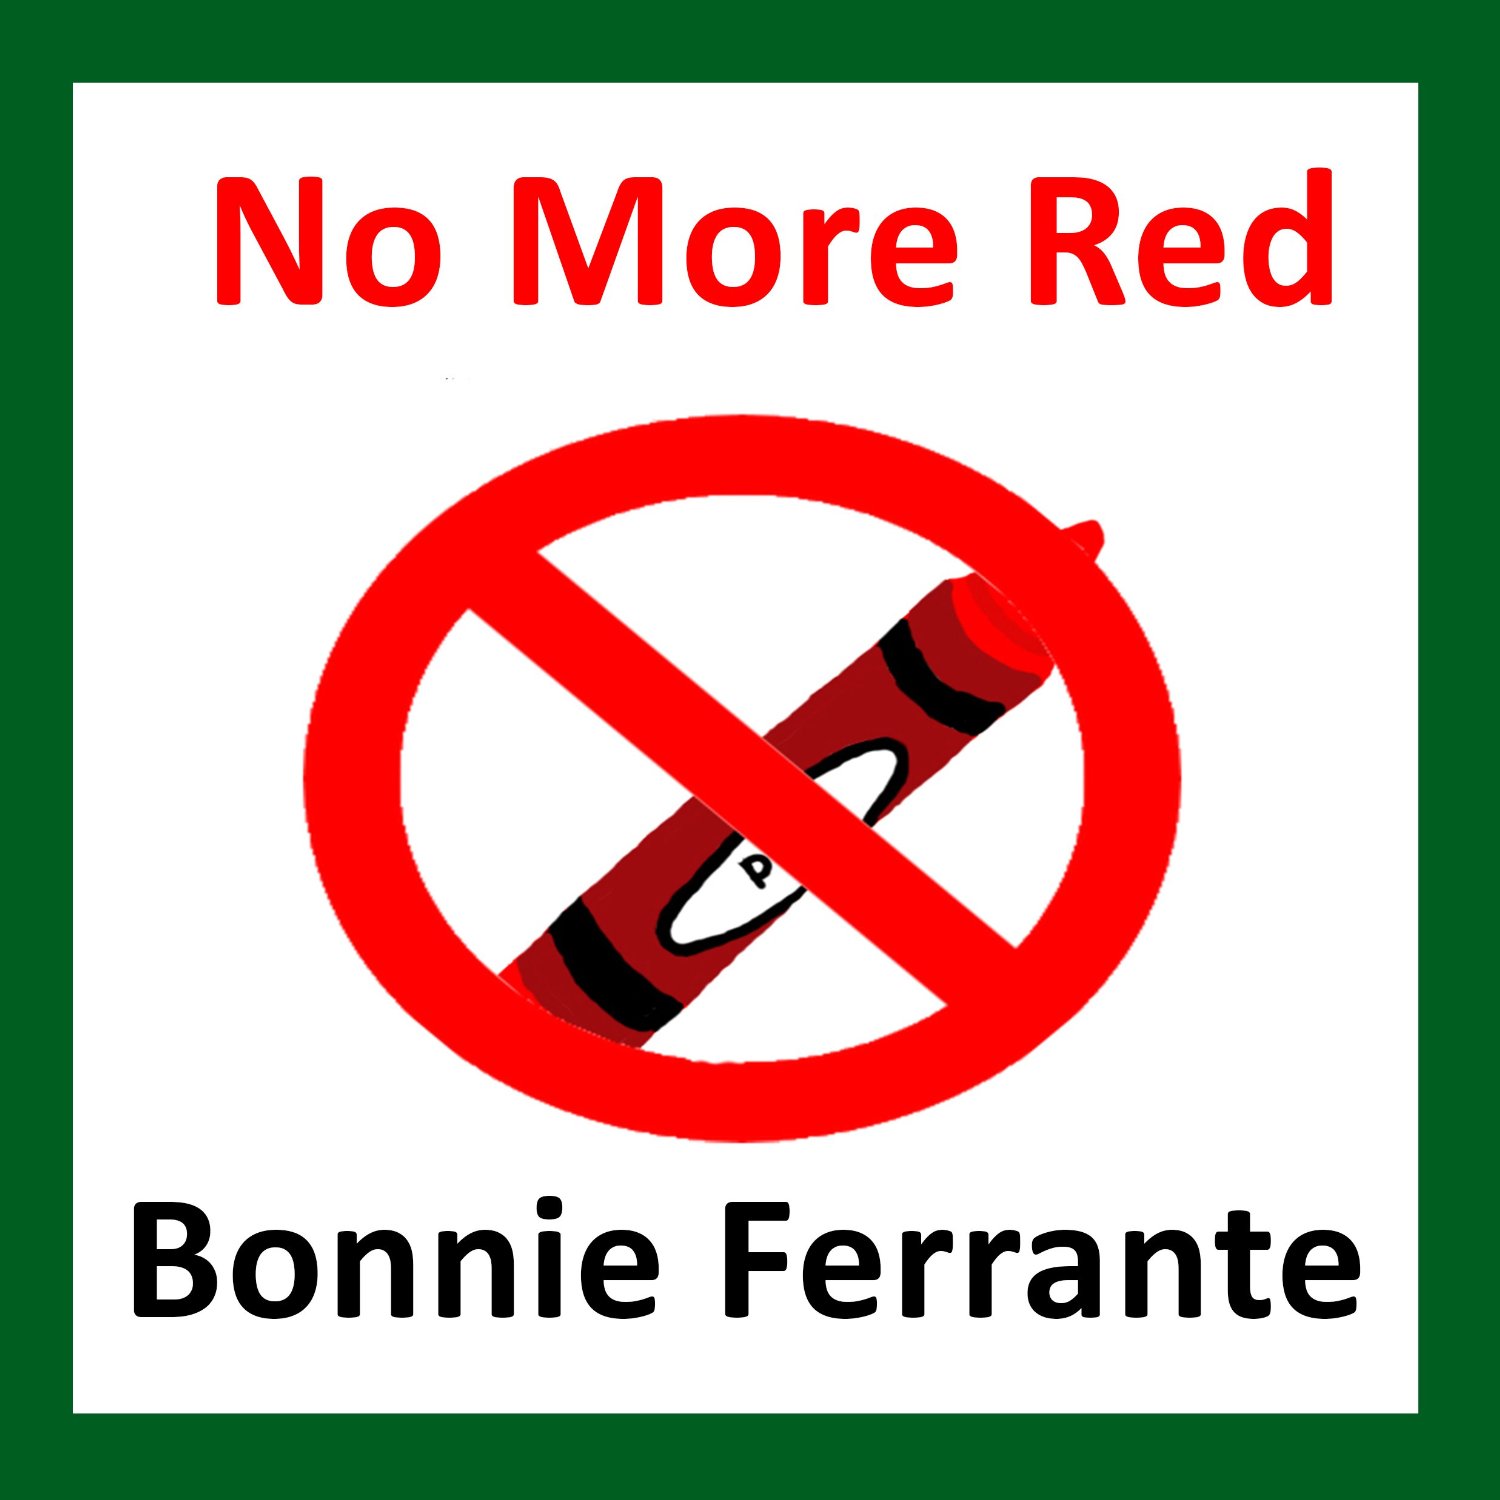 No More Red by Bonnie Ferrante